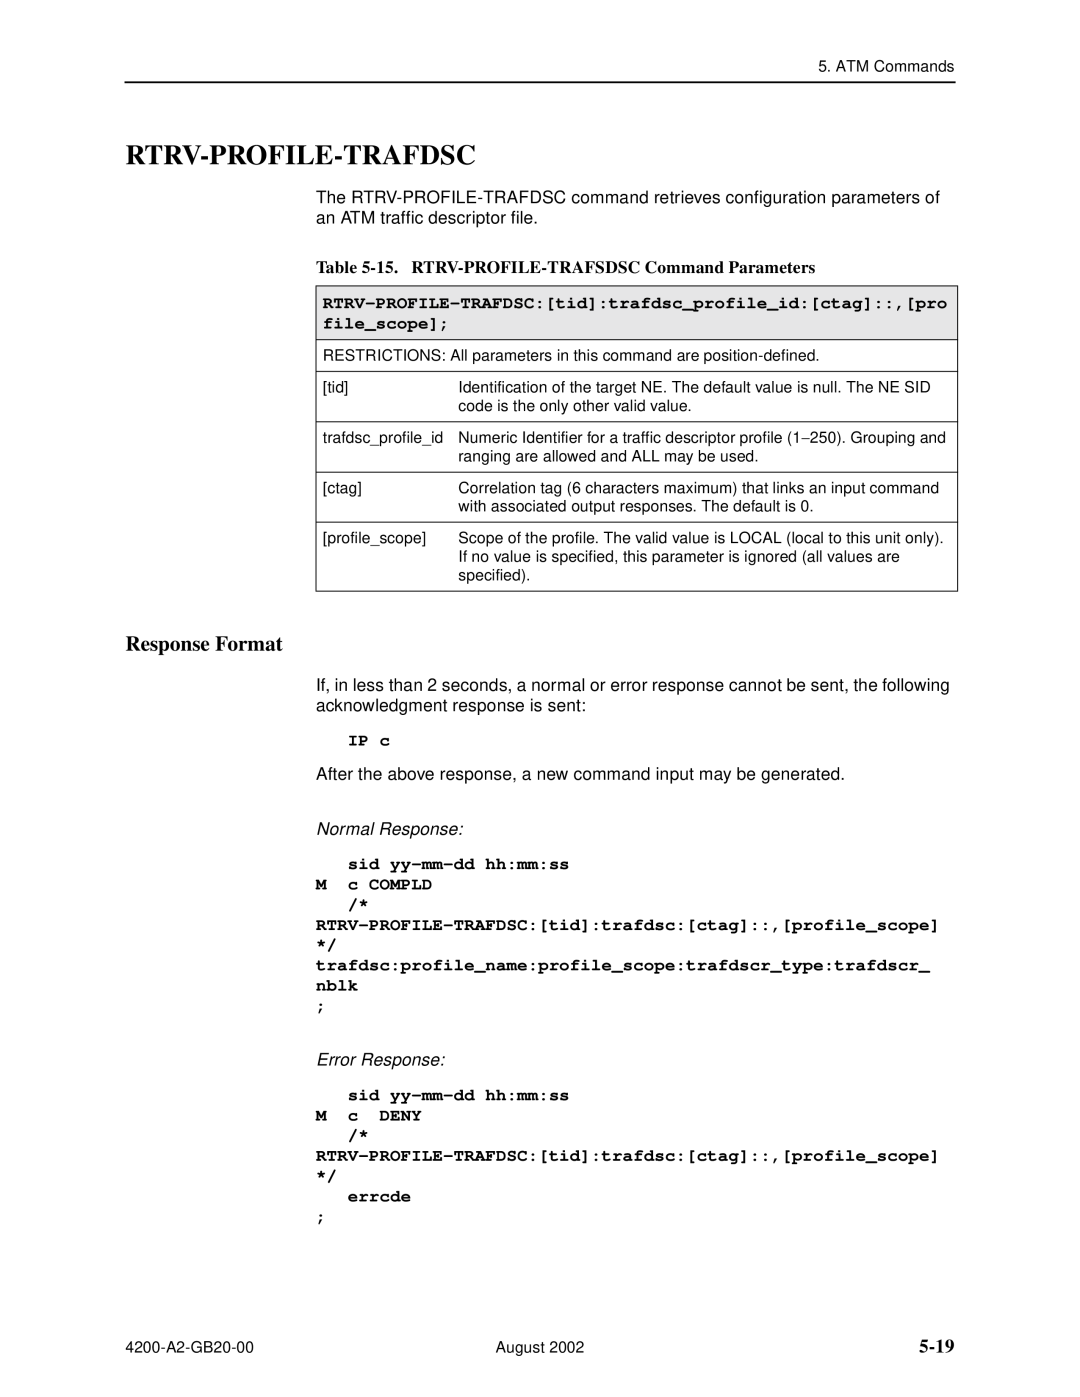 Paradyne 4200 manual Rtrv-Profile-Trafdsc, 5-19, 15. RTRV-PROFILE-TRAFSDSC Command Parameters, Response Format, IP c 